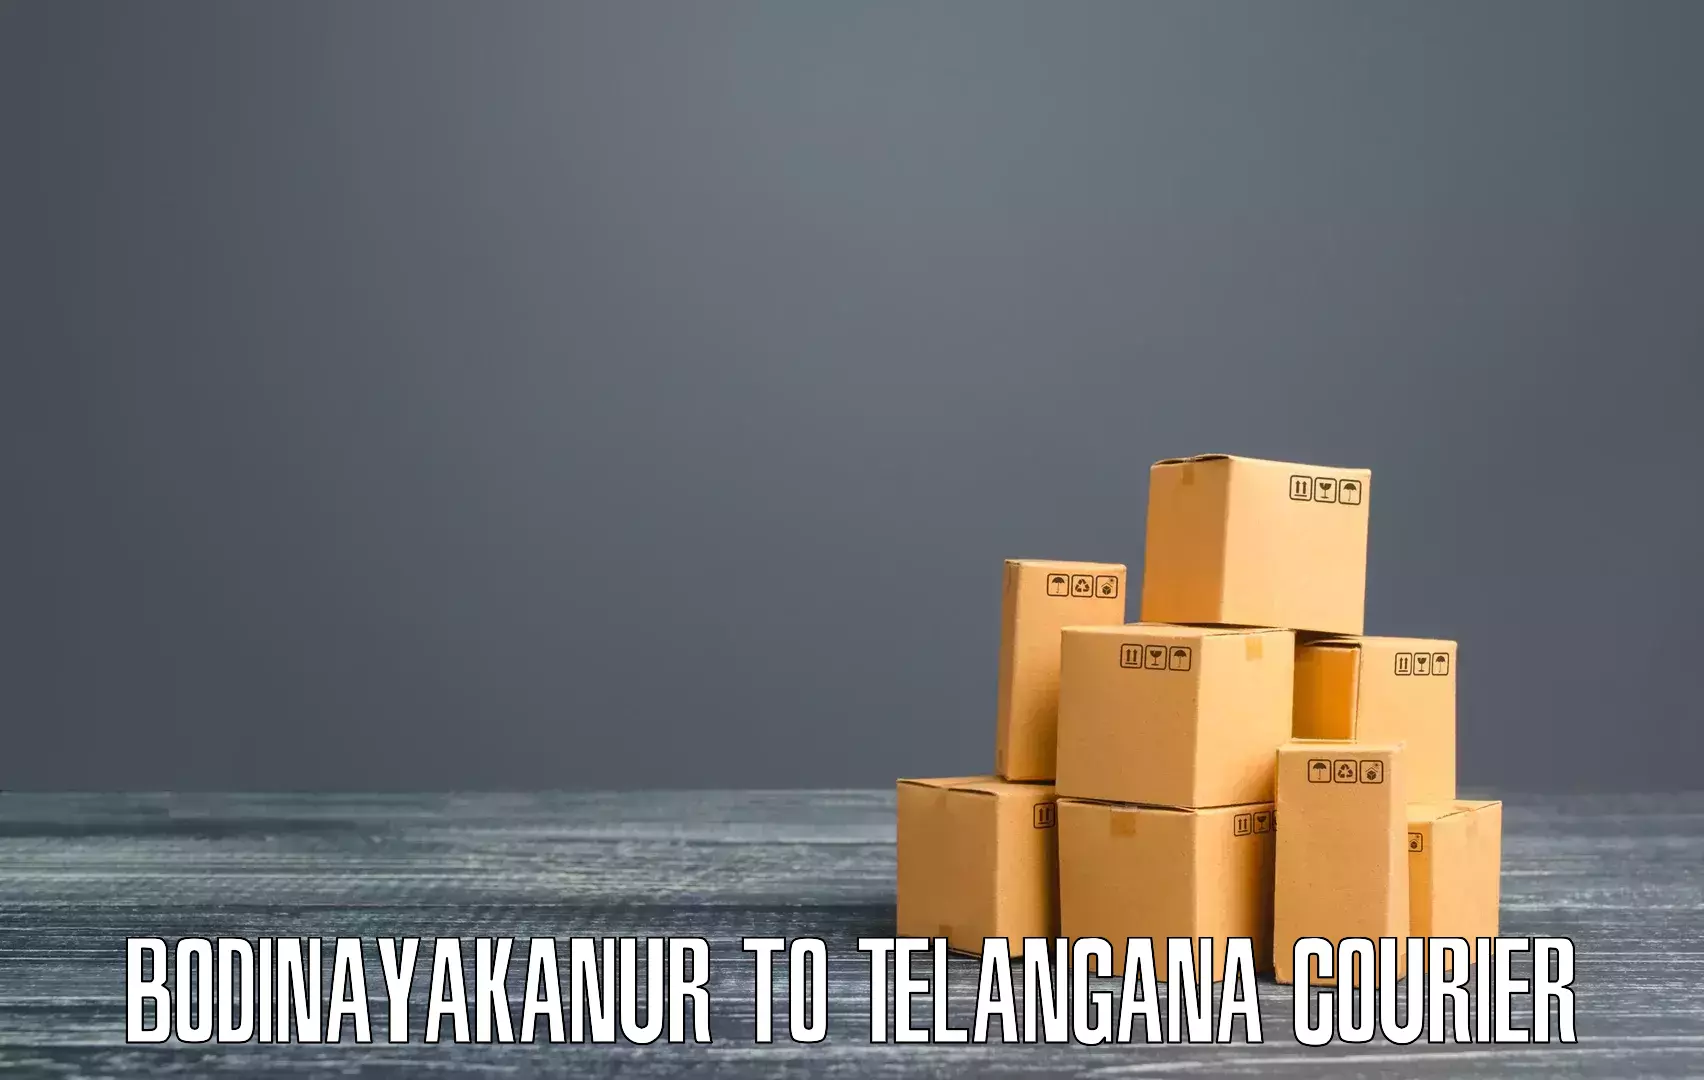 Advanced tracking systems Bodinayakanur to Telangana